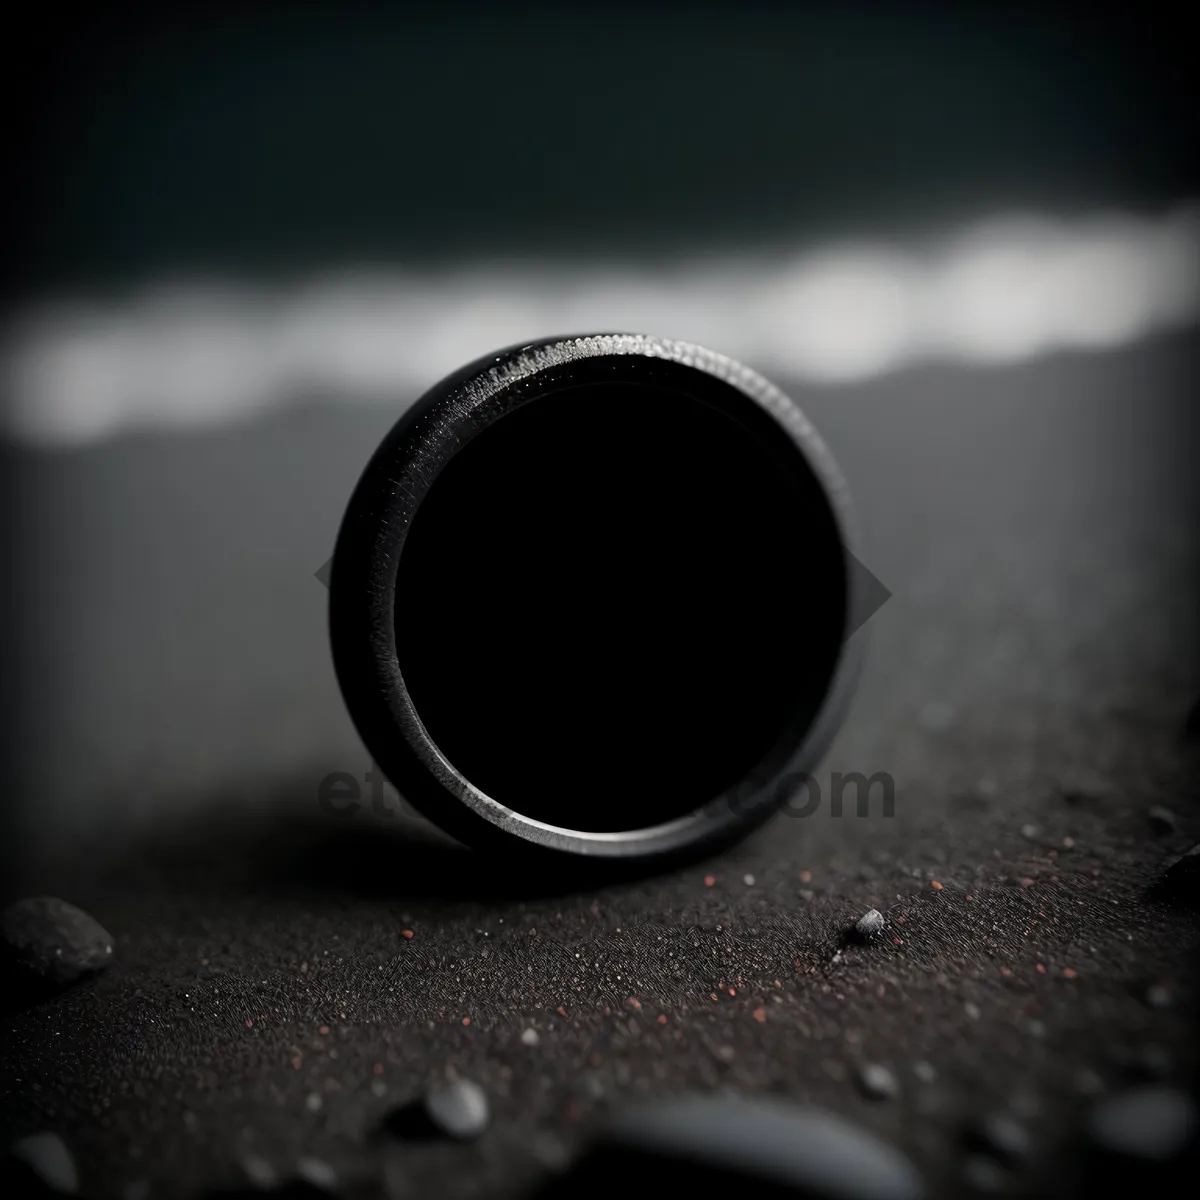 Picture of Black Lens Cap Close-Up